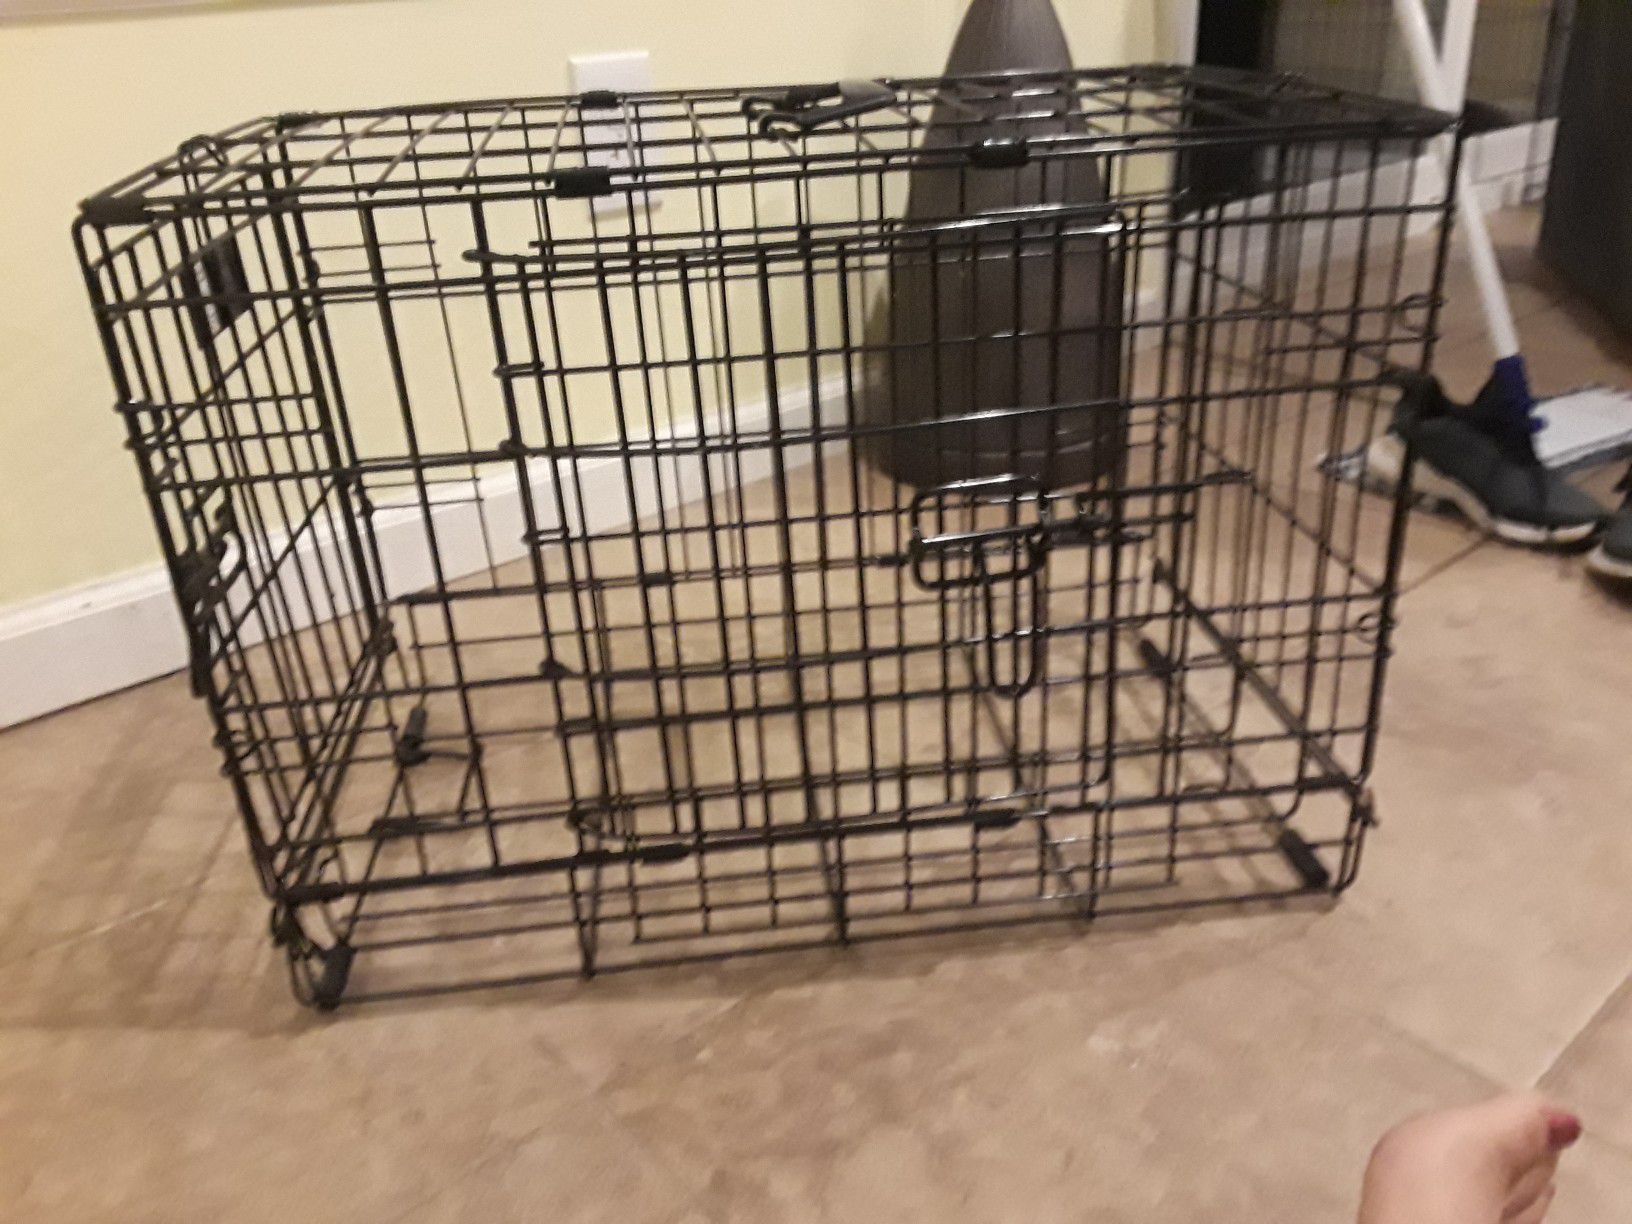 Small dog/animal cage